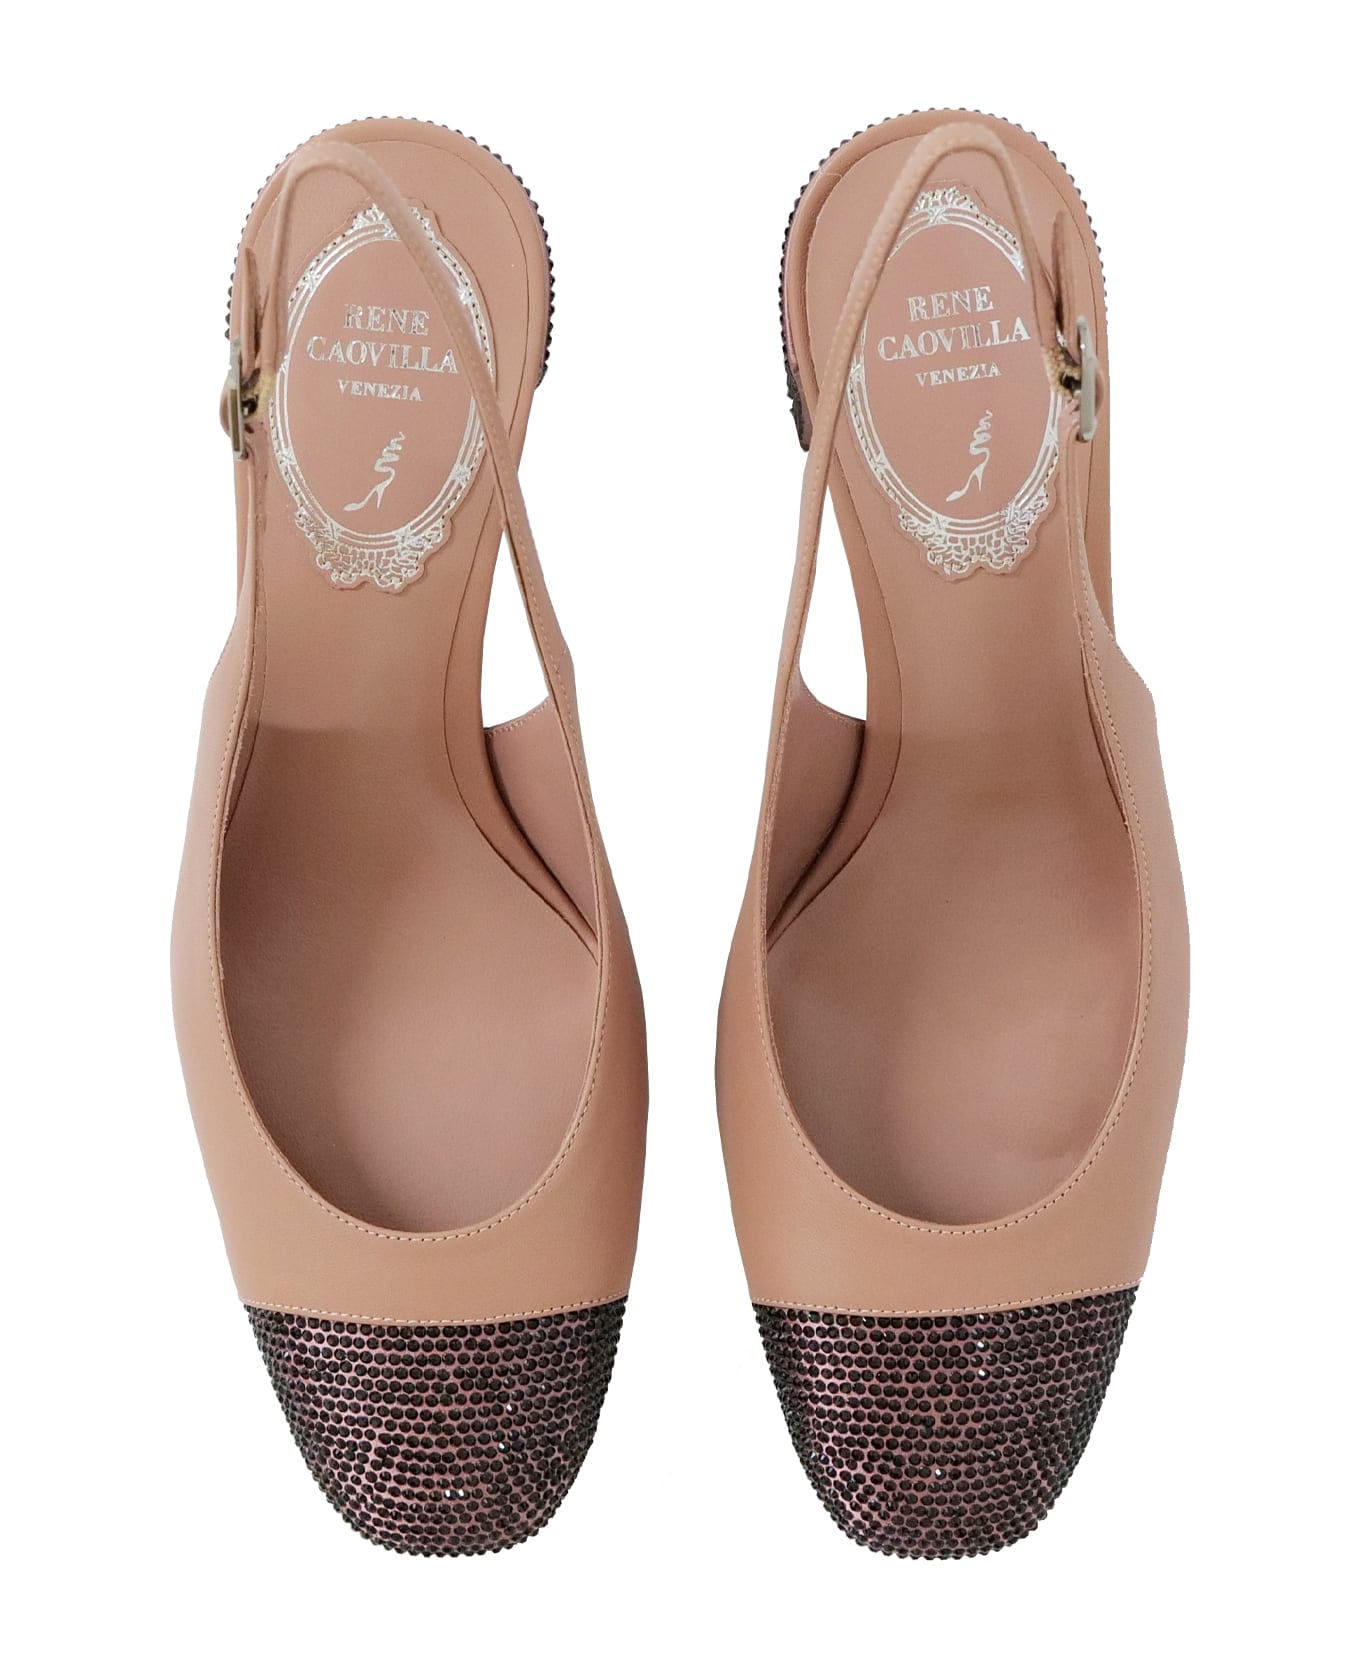 René Caovilla Shoes With Heels - Pink